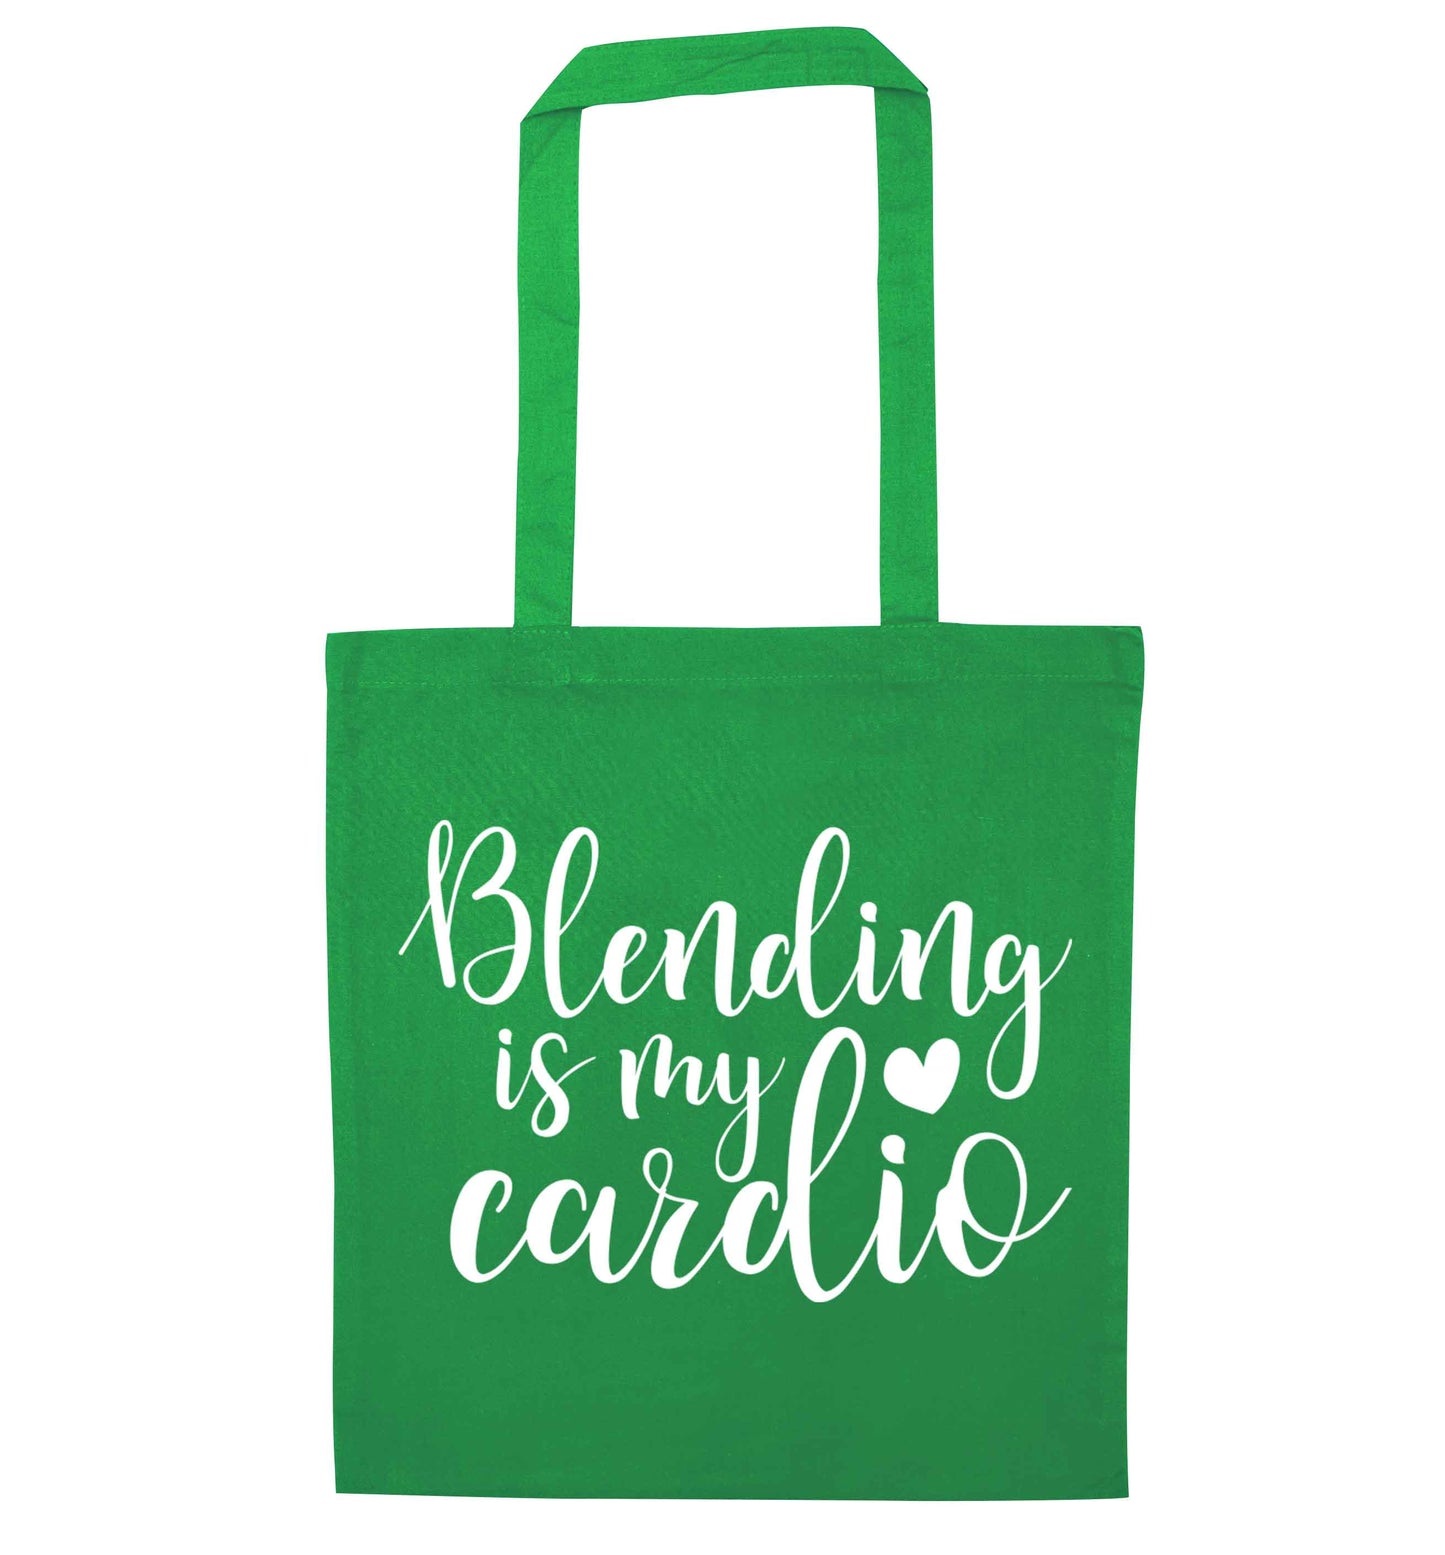 Blending is my cardio green tote bag